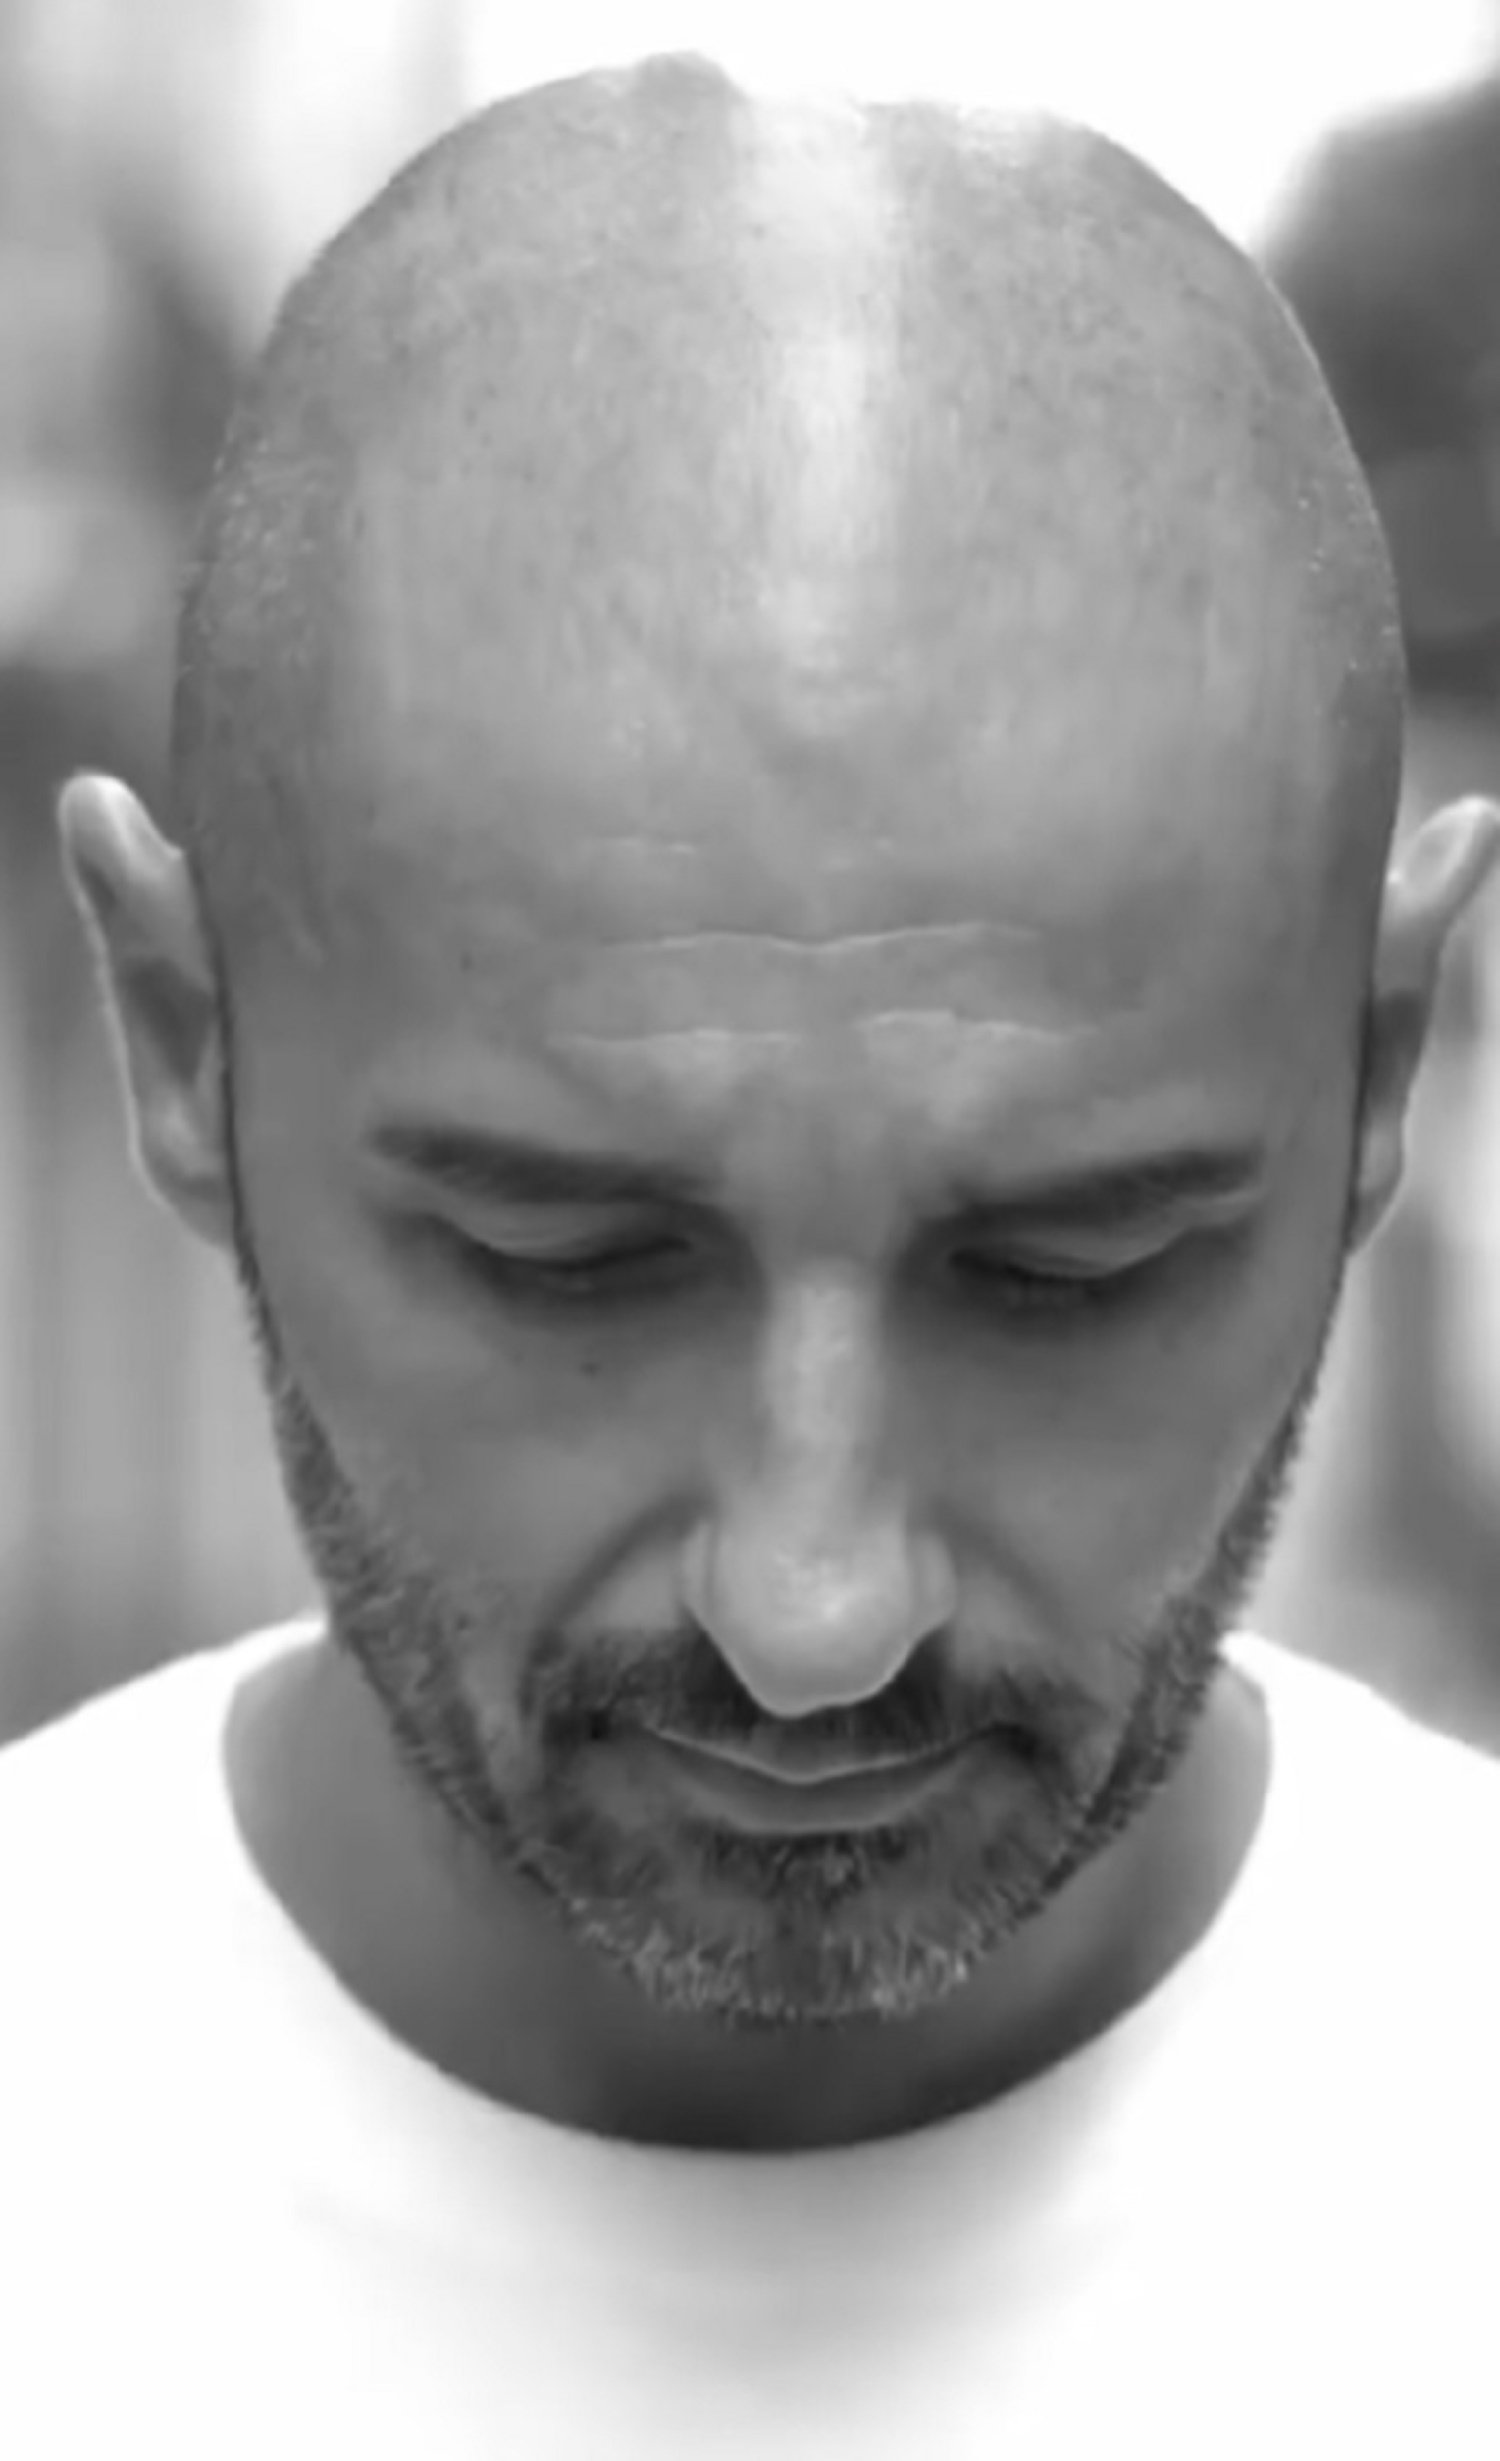 L'estimat actor català Alain Hernández fa plorar, colpidor comiat a un company de vida: "Cómo duele"